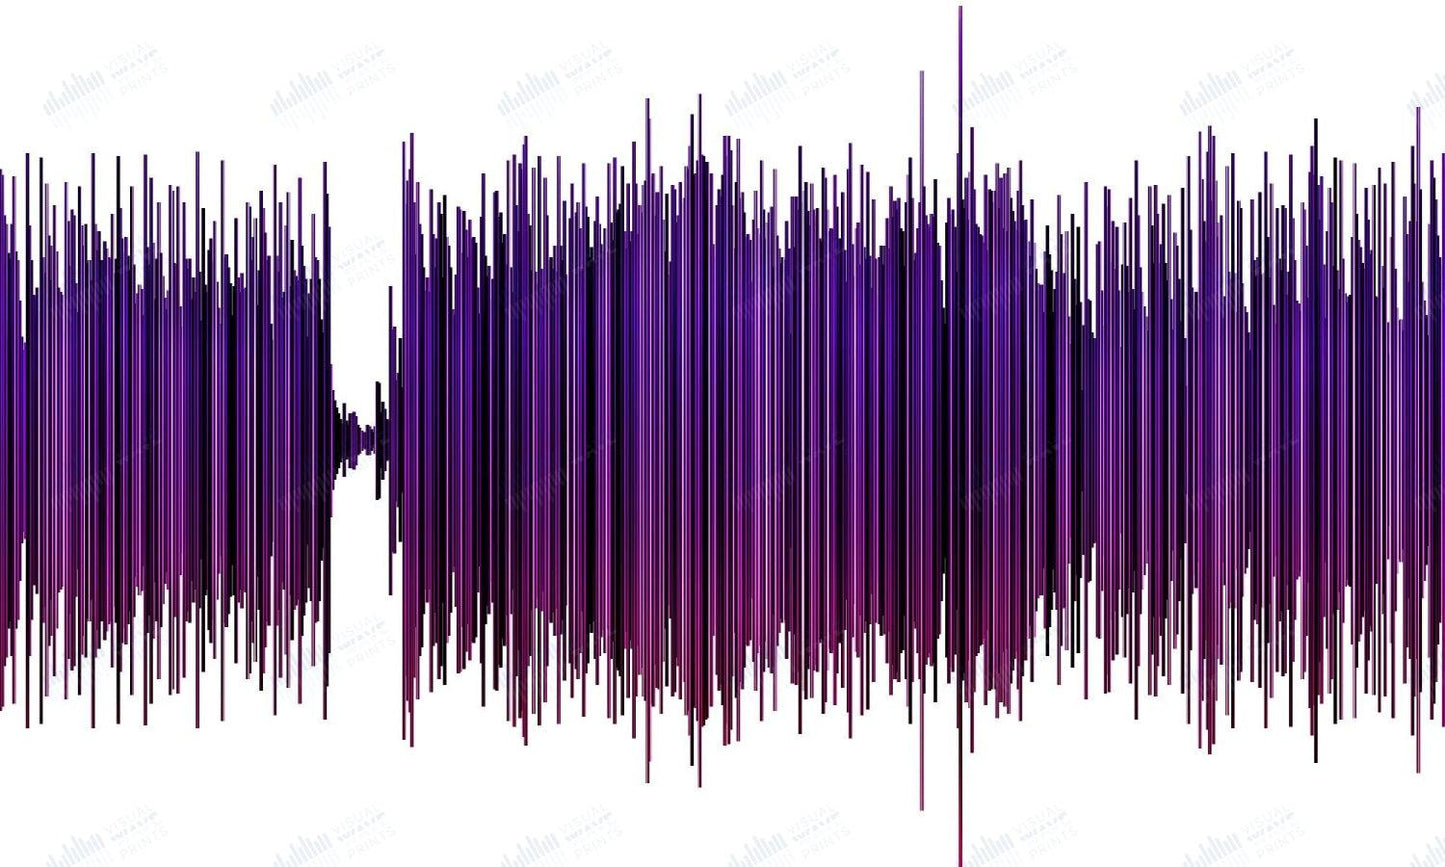 Purple Haze by Jimi Hendrix - Visual Wave Prints